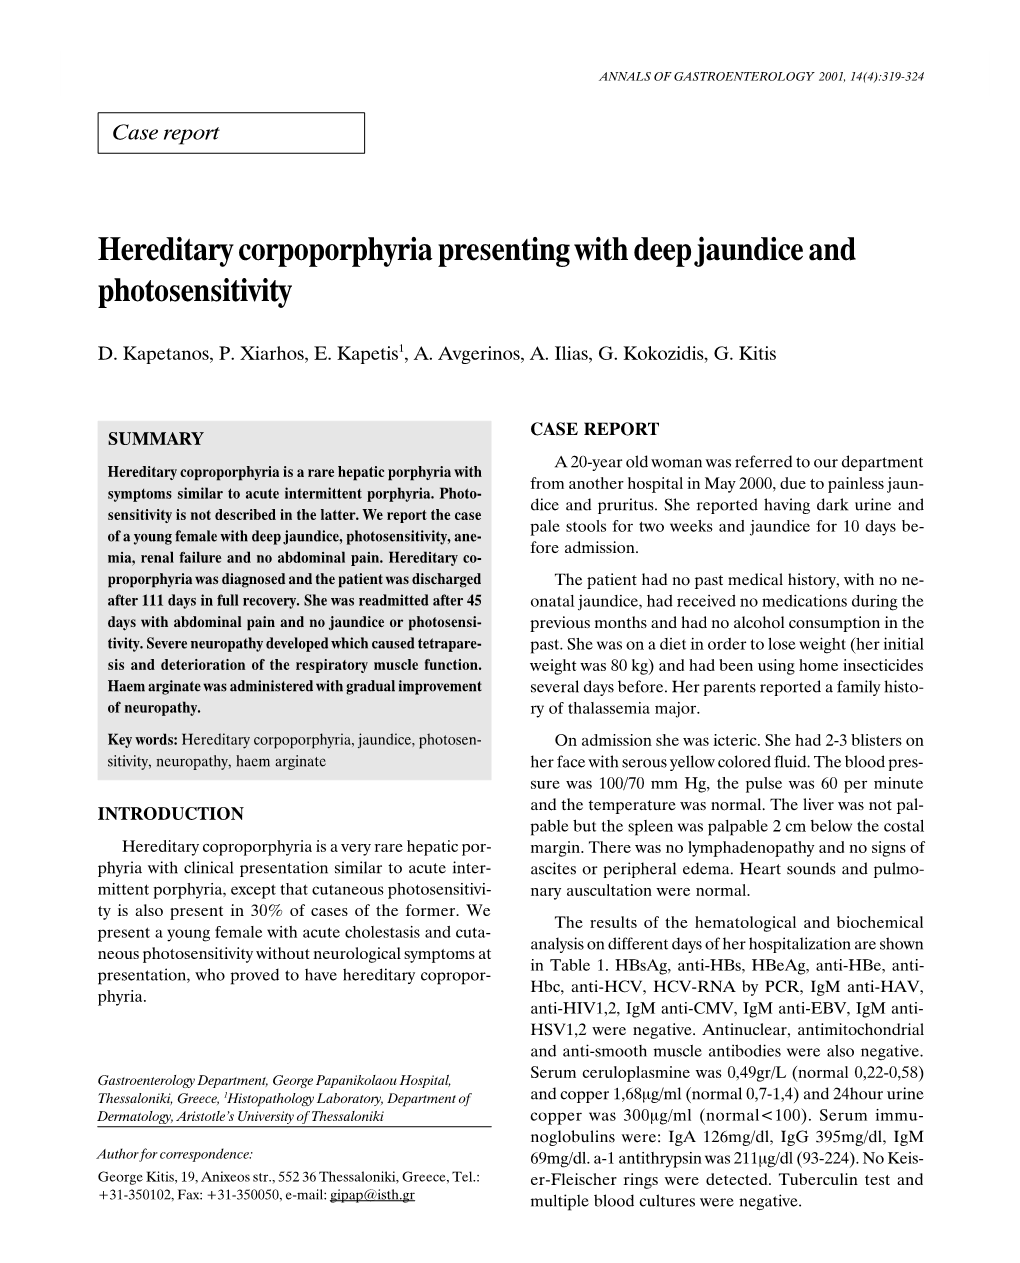 Hereditary Corpoporphyria Presenting with Deep Jaundice and Photosensitivity